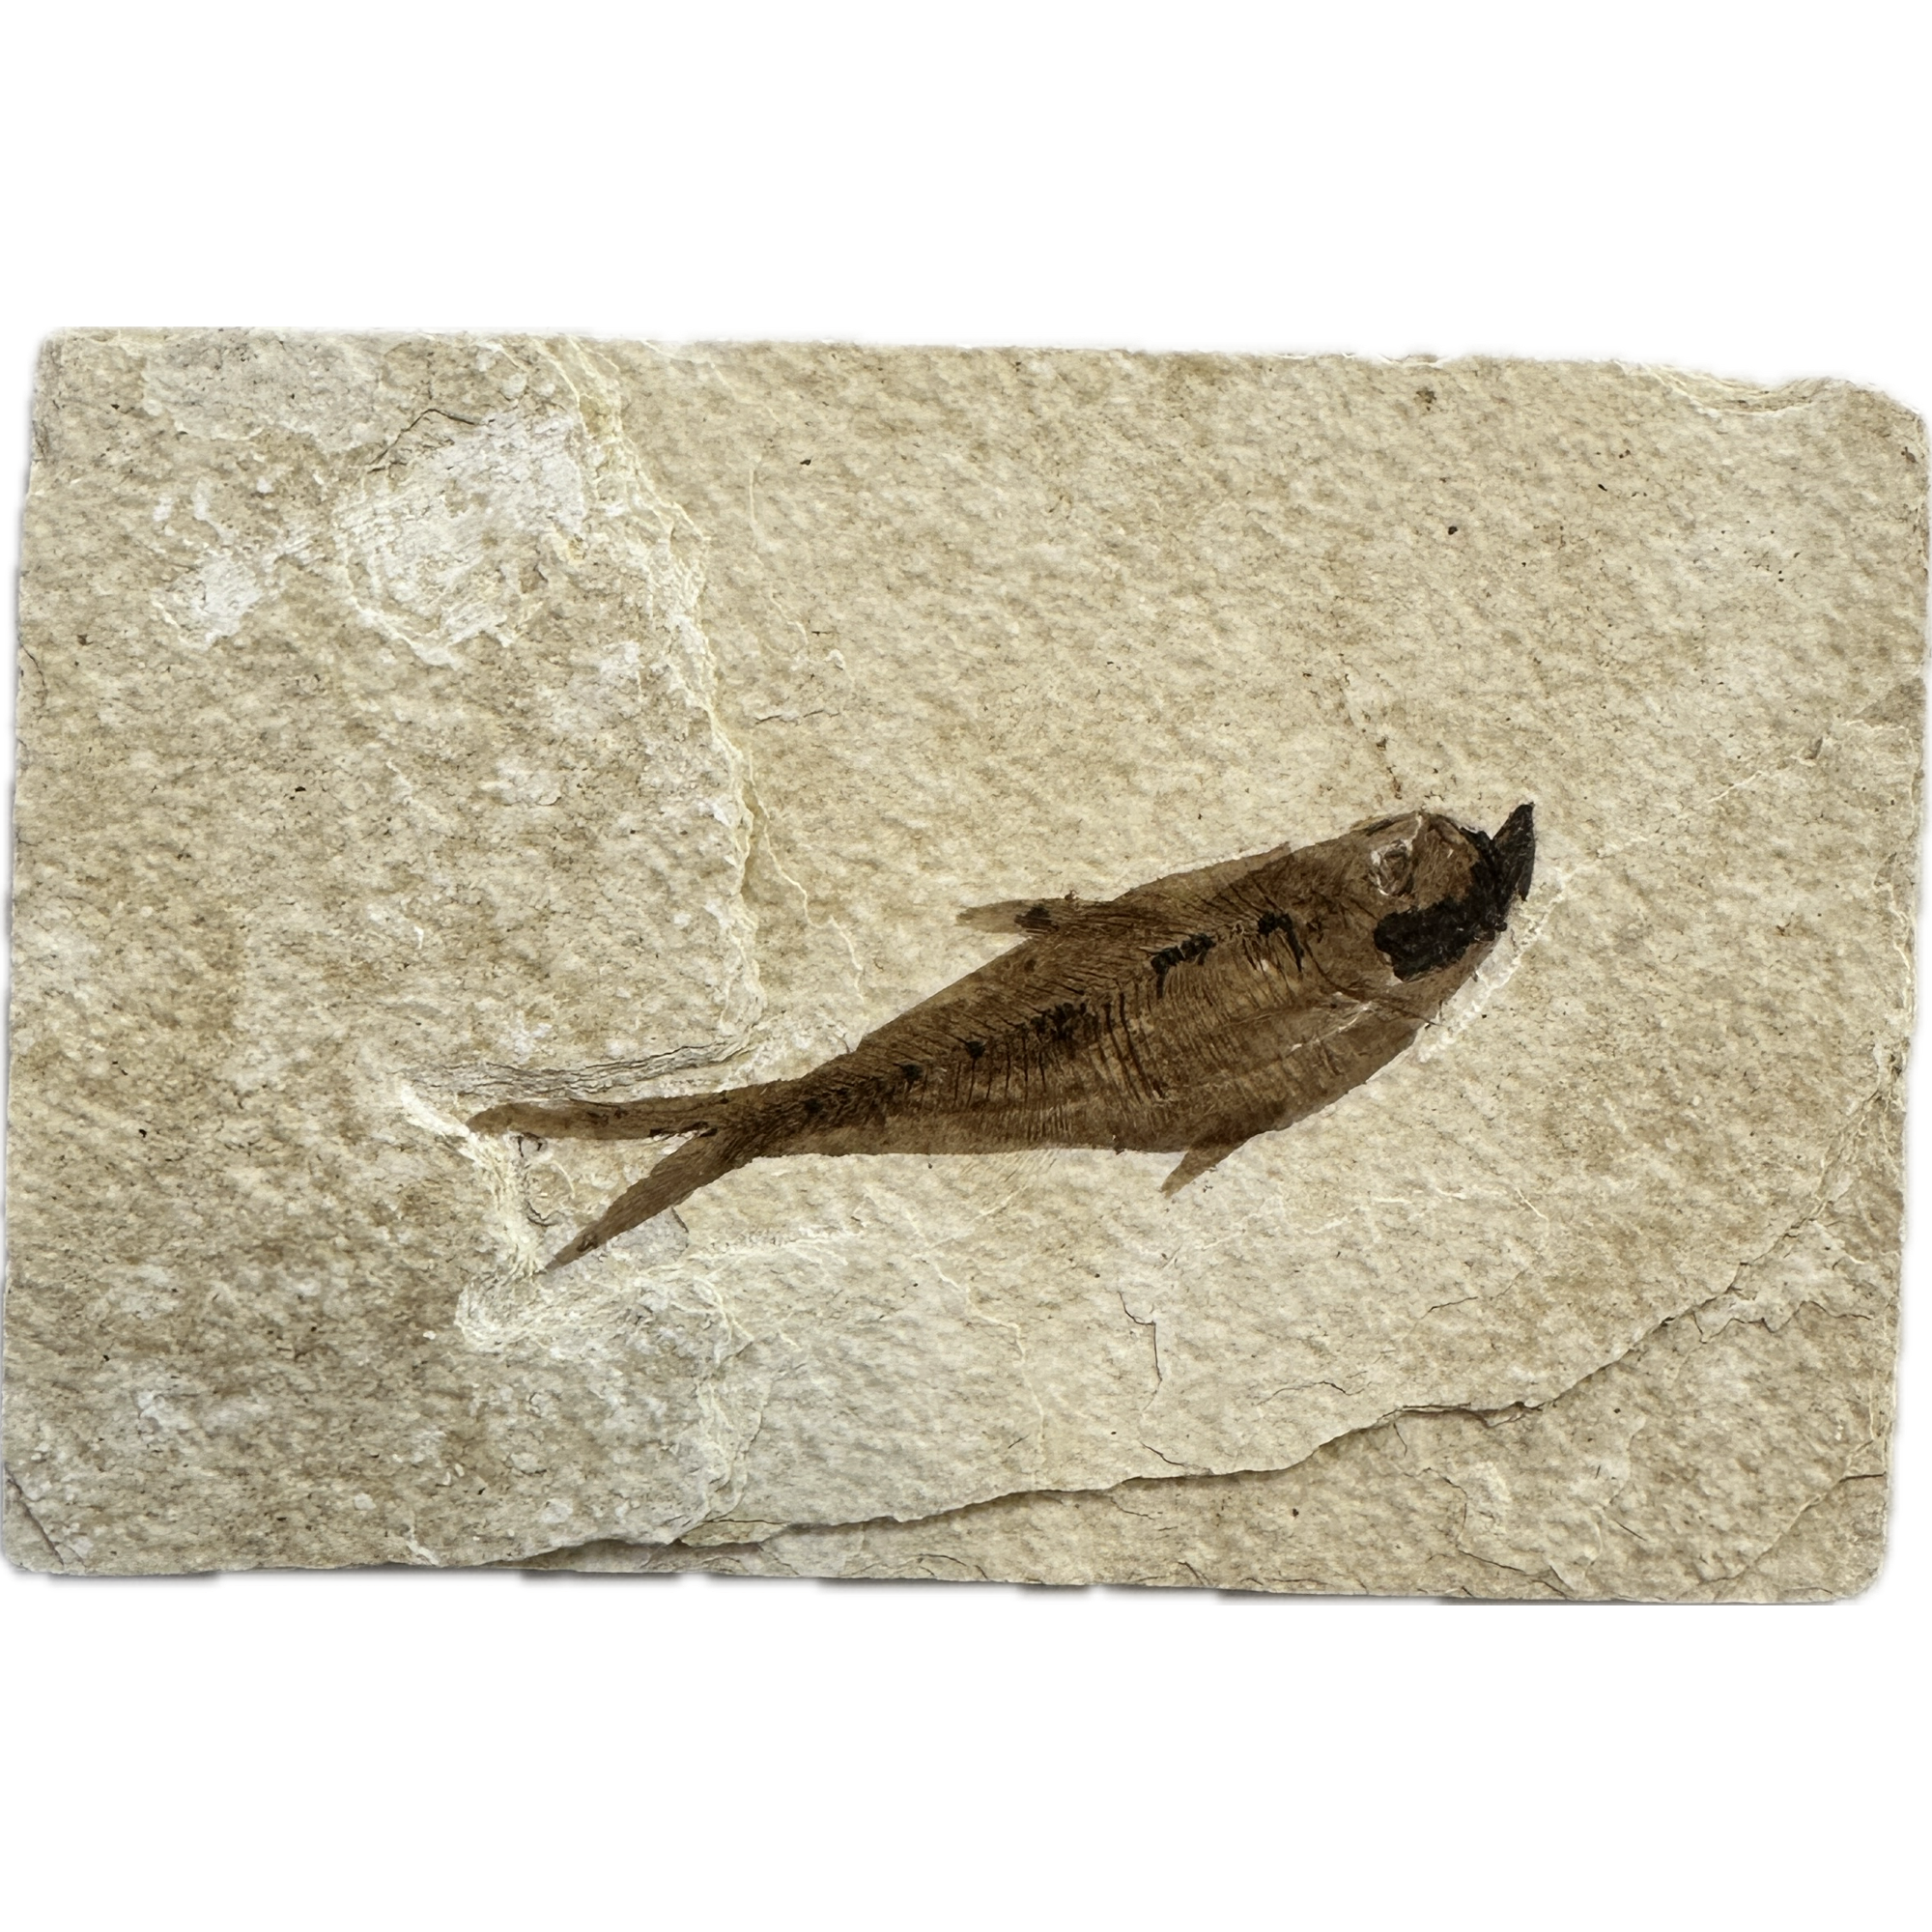 Diplomystis Fossil Fish, Kemmerer, WY Prehistoric Online